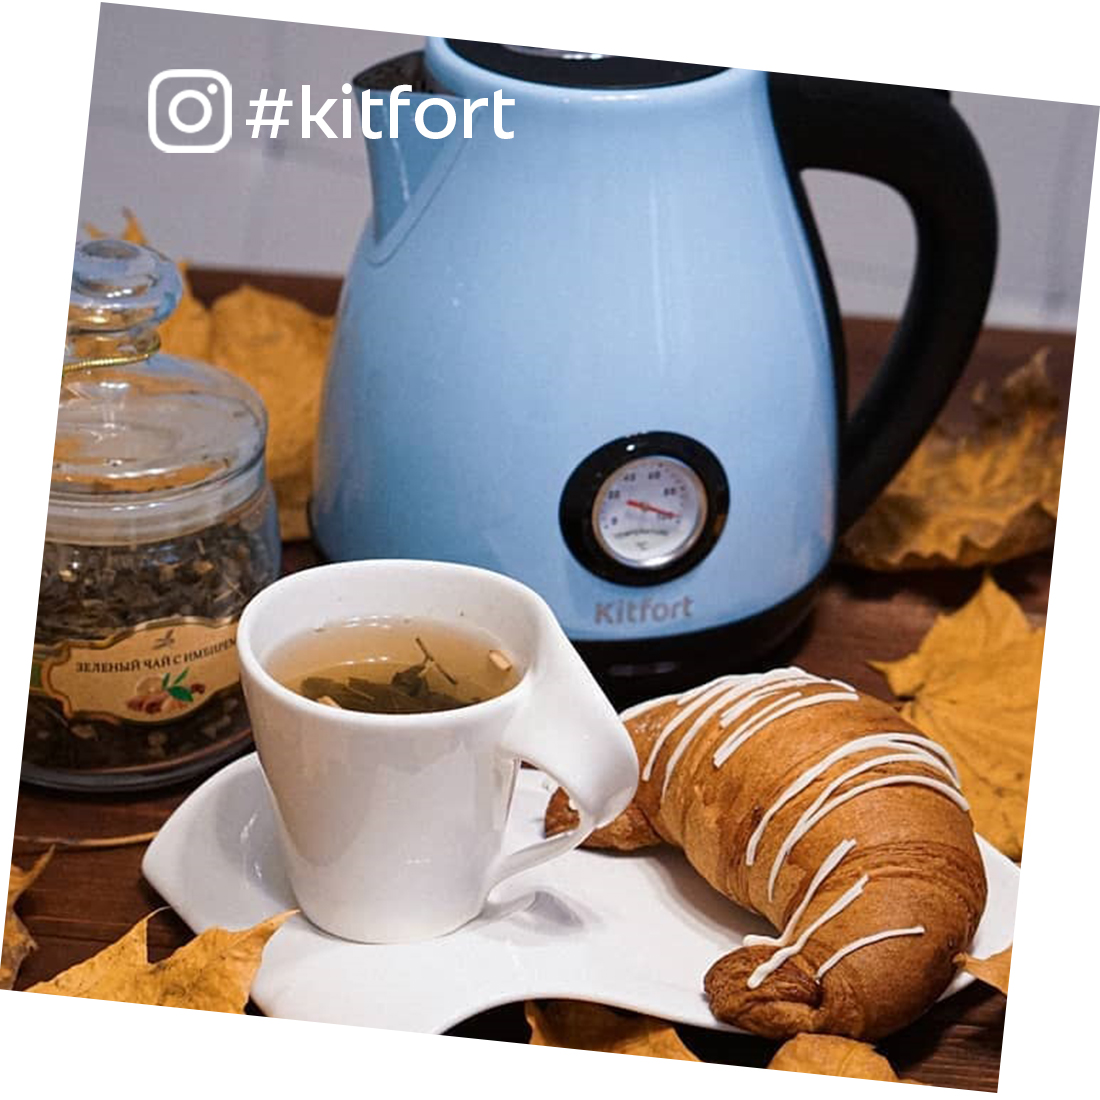 Чайник Kitfort KT-642-2, голубой